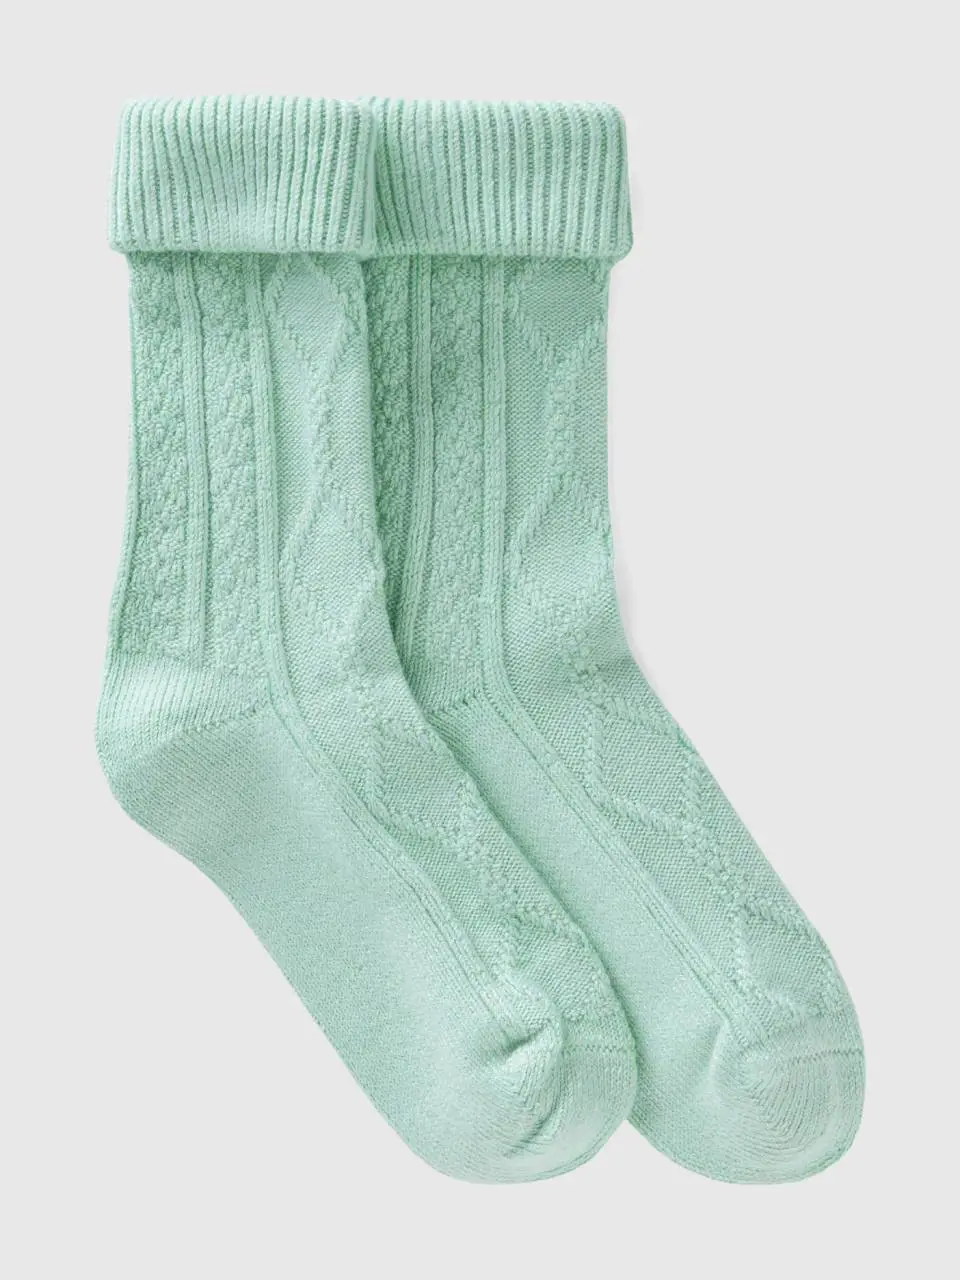 Benetton jacquard socks. 1